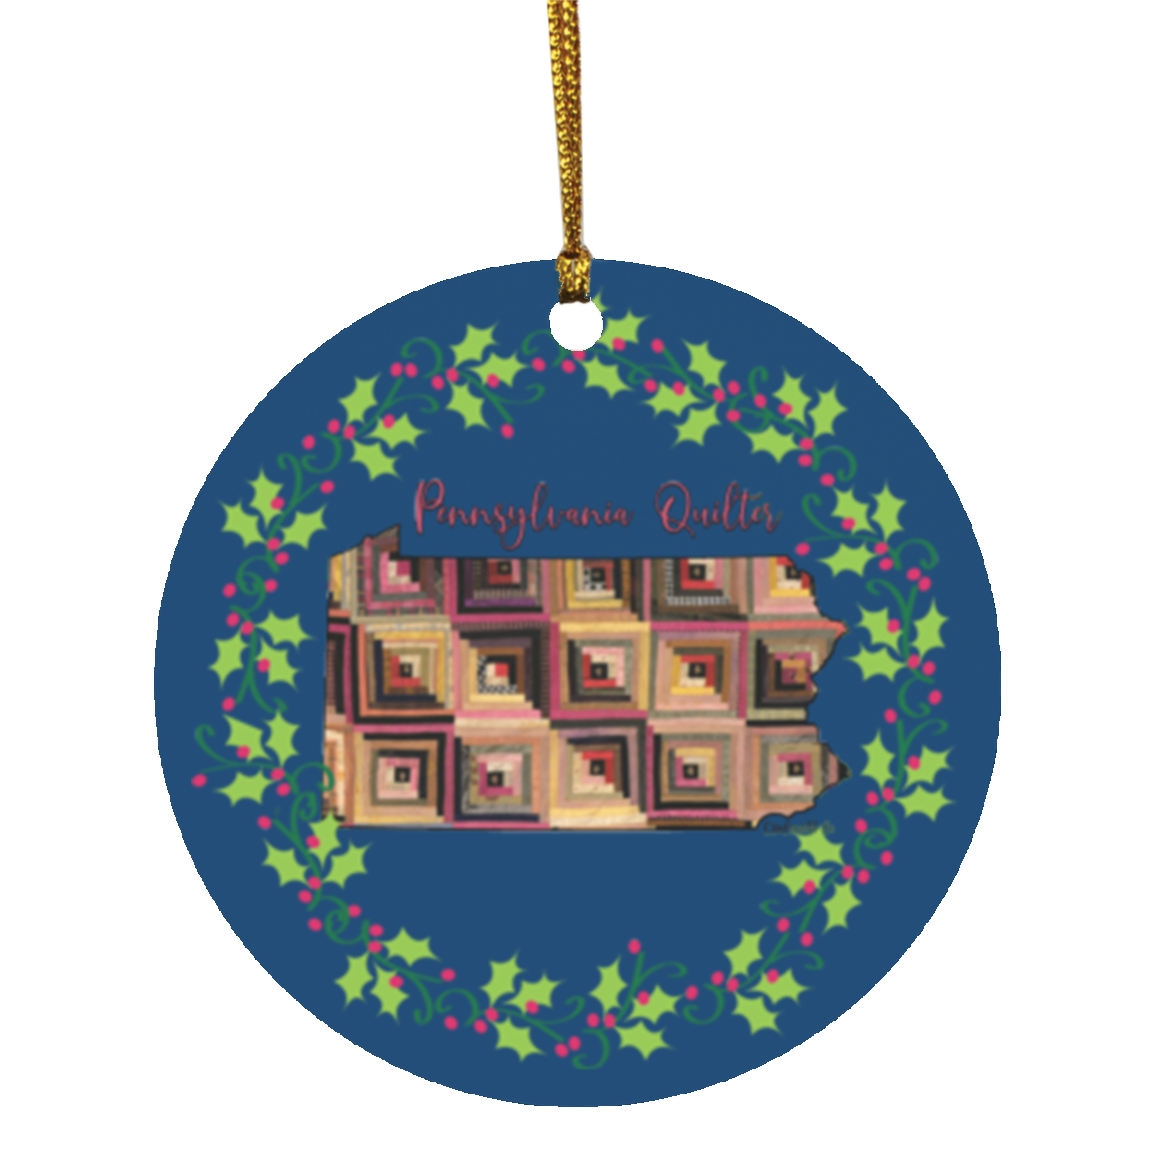 Pennsylvania Quilter Christmas Circle Ornament